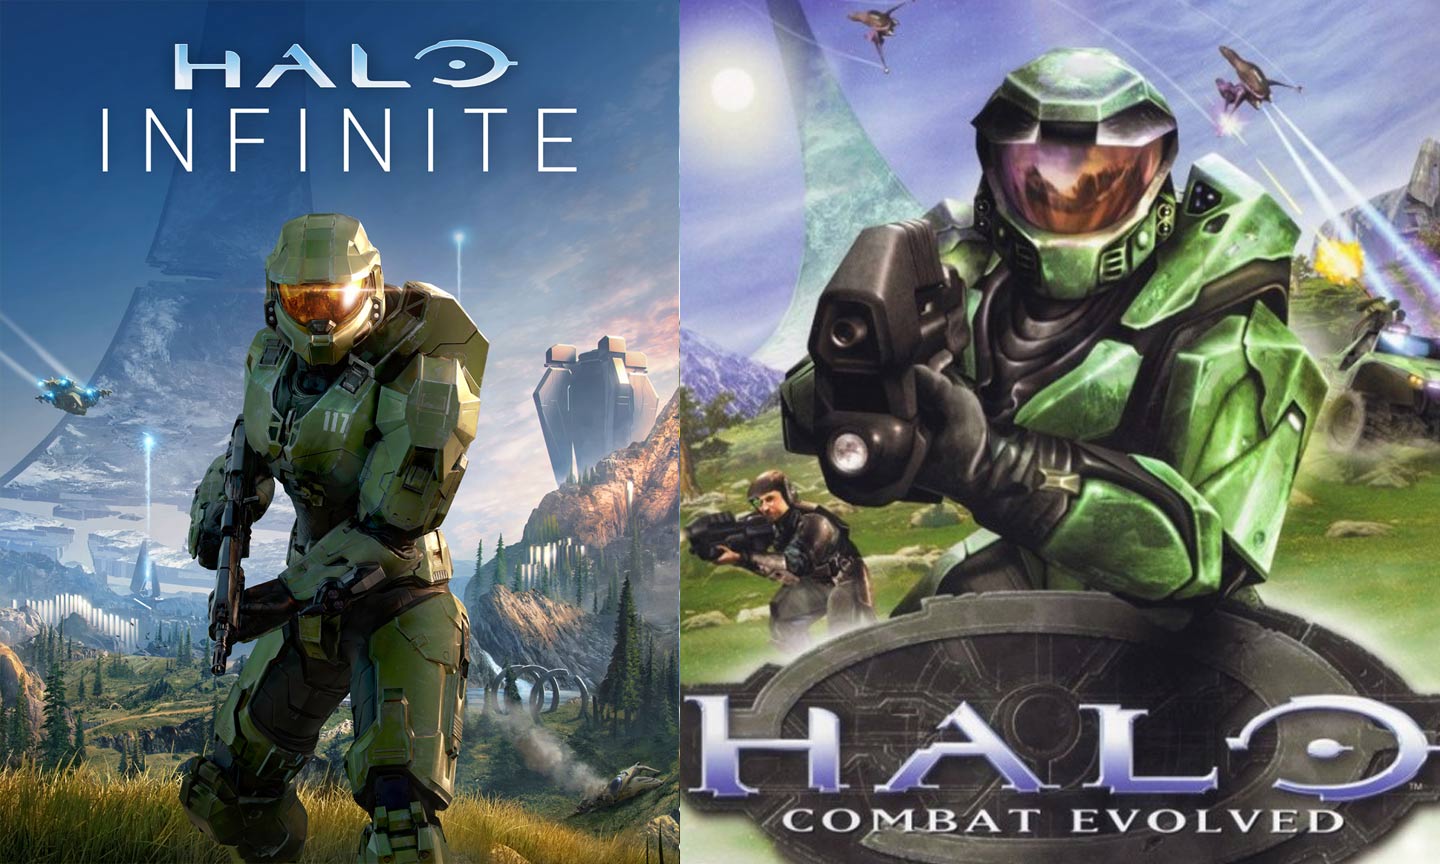 Halo Infinite-Cover im Vergleich mit dem Halo Combat Evolved-Cover.